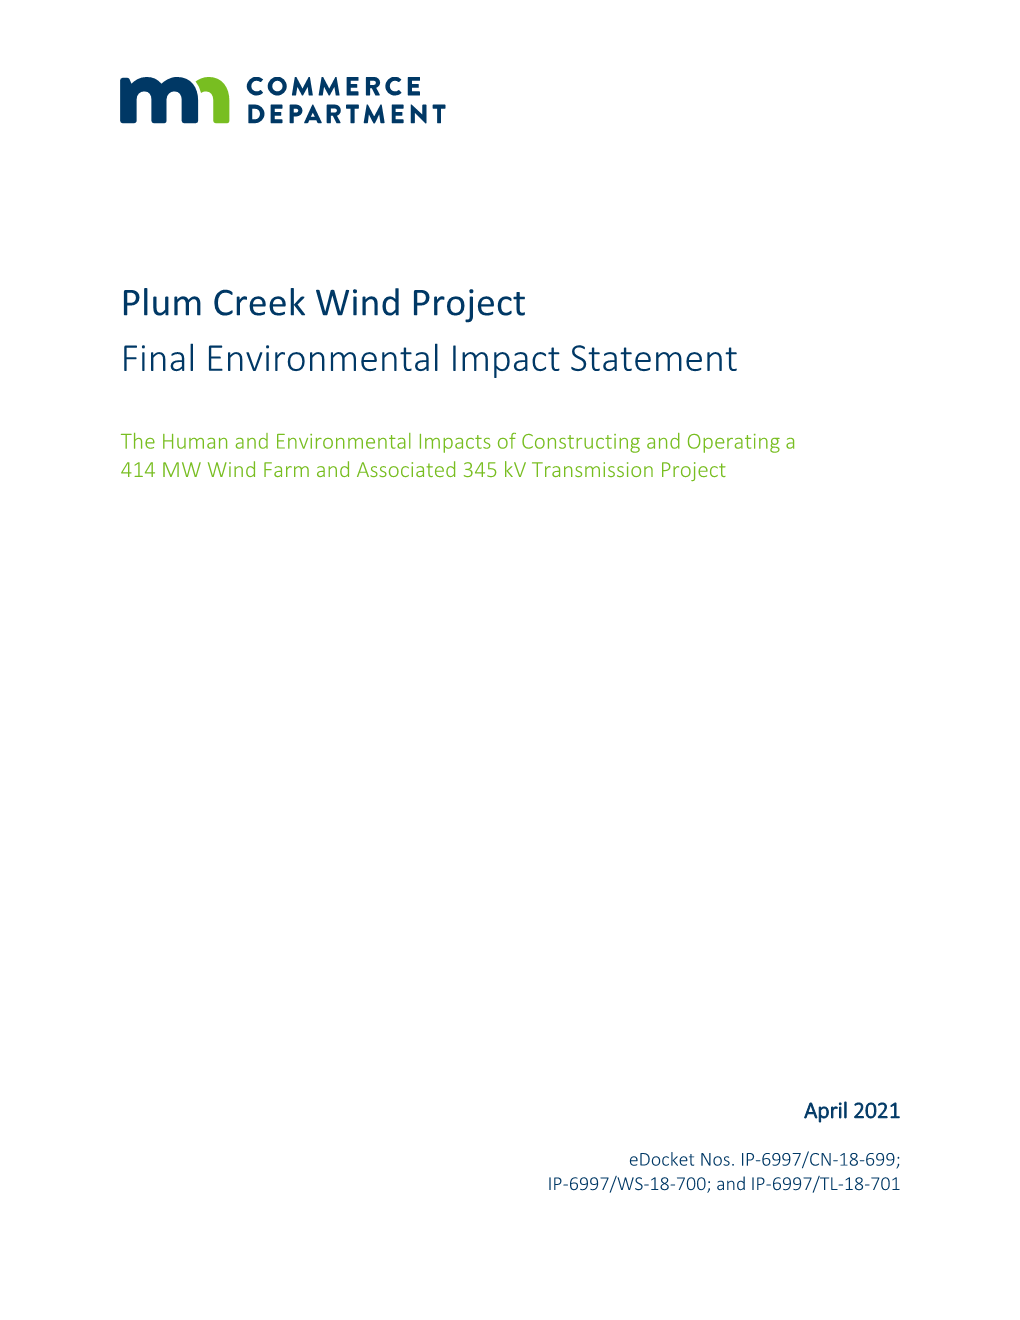 Plum Creek Wind Project Final Environmental Impact Statement